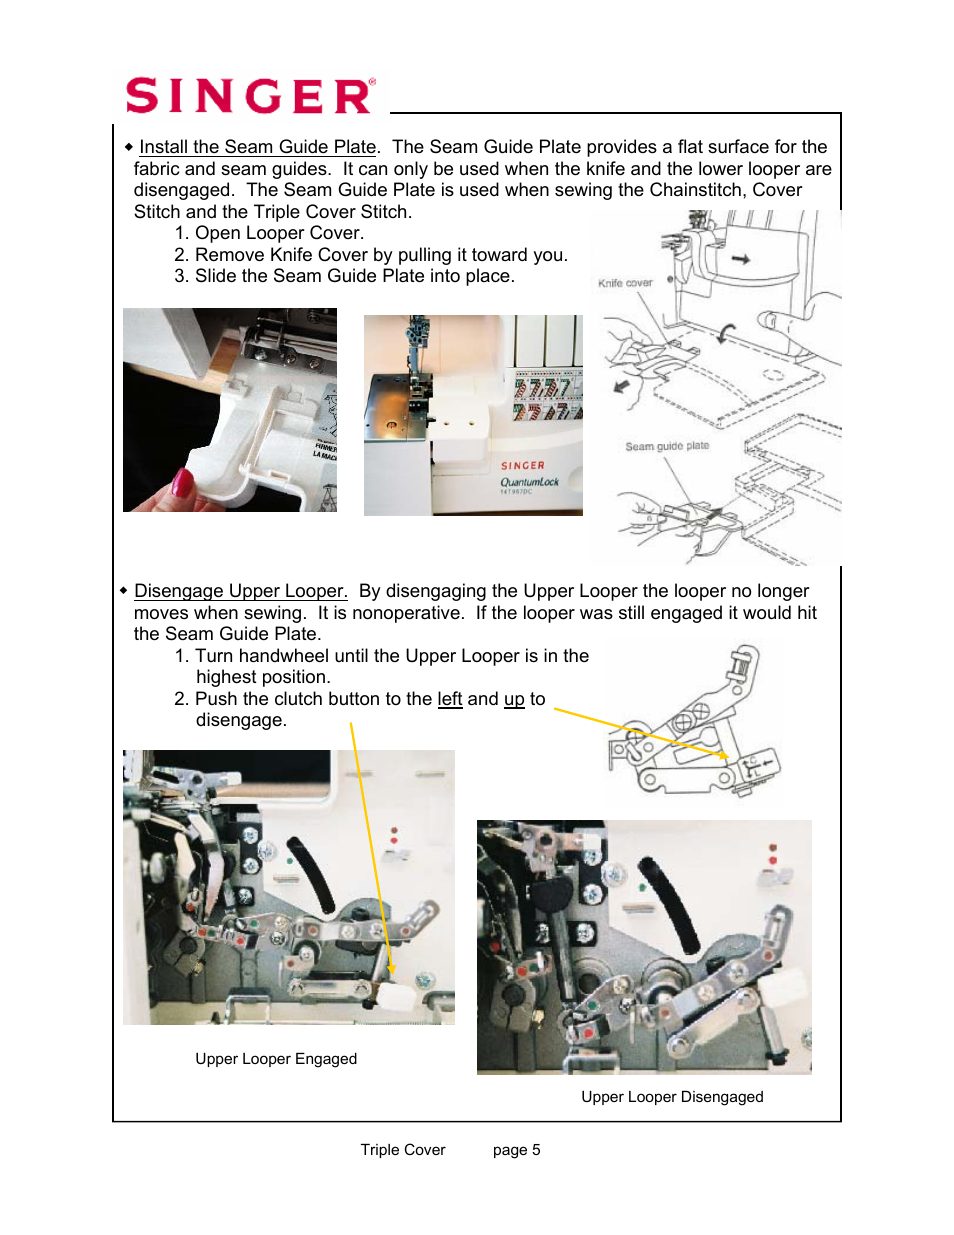 SINGER 14T967DC-WORKBOOK QUANTUMLOCK User Manual | Page 207 / 230